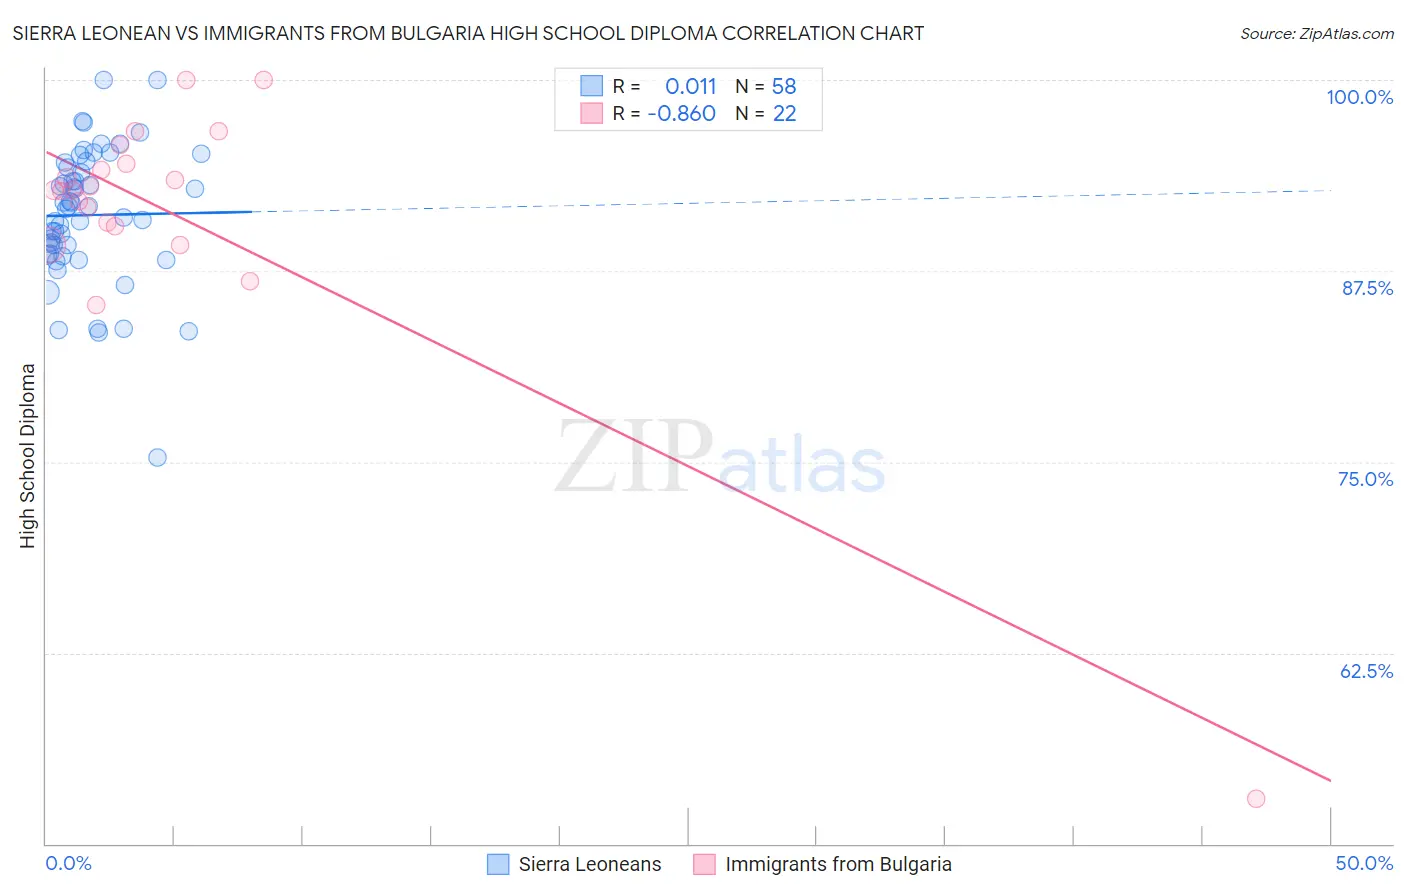 Sierra Leonean vs Immigrants from Bulgaria High School Diploma